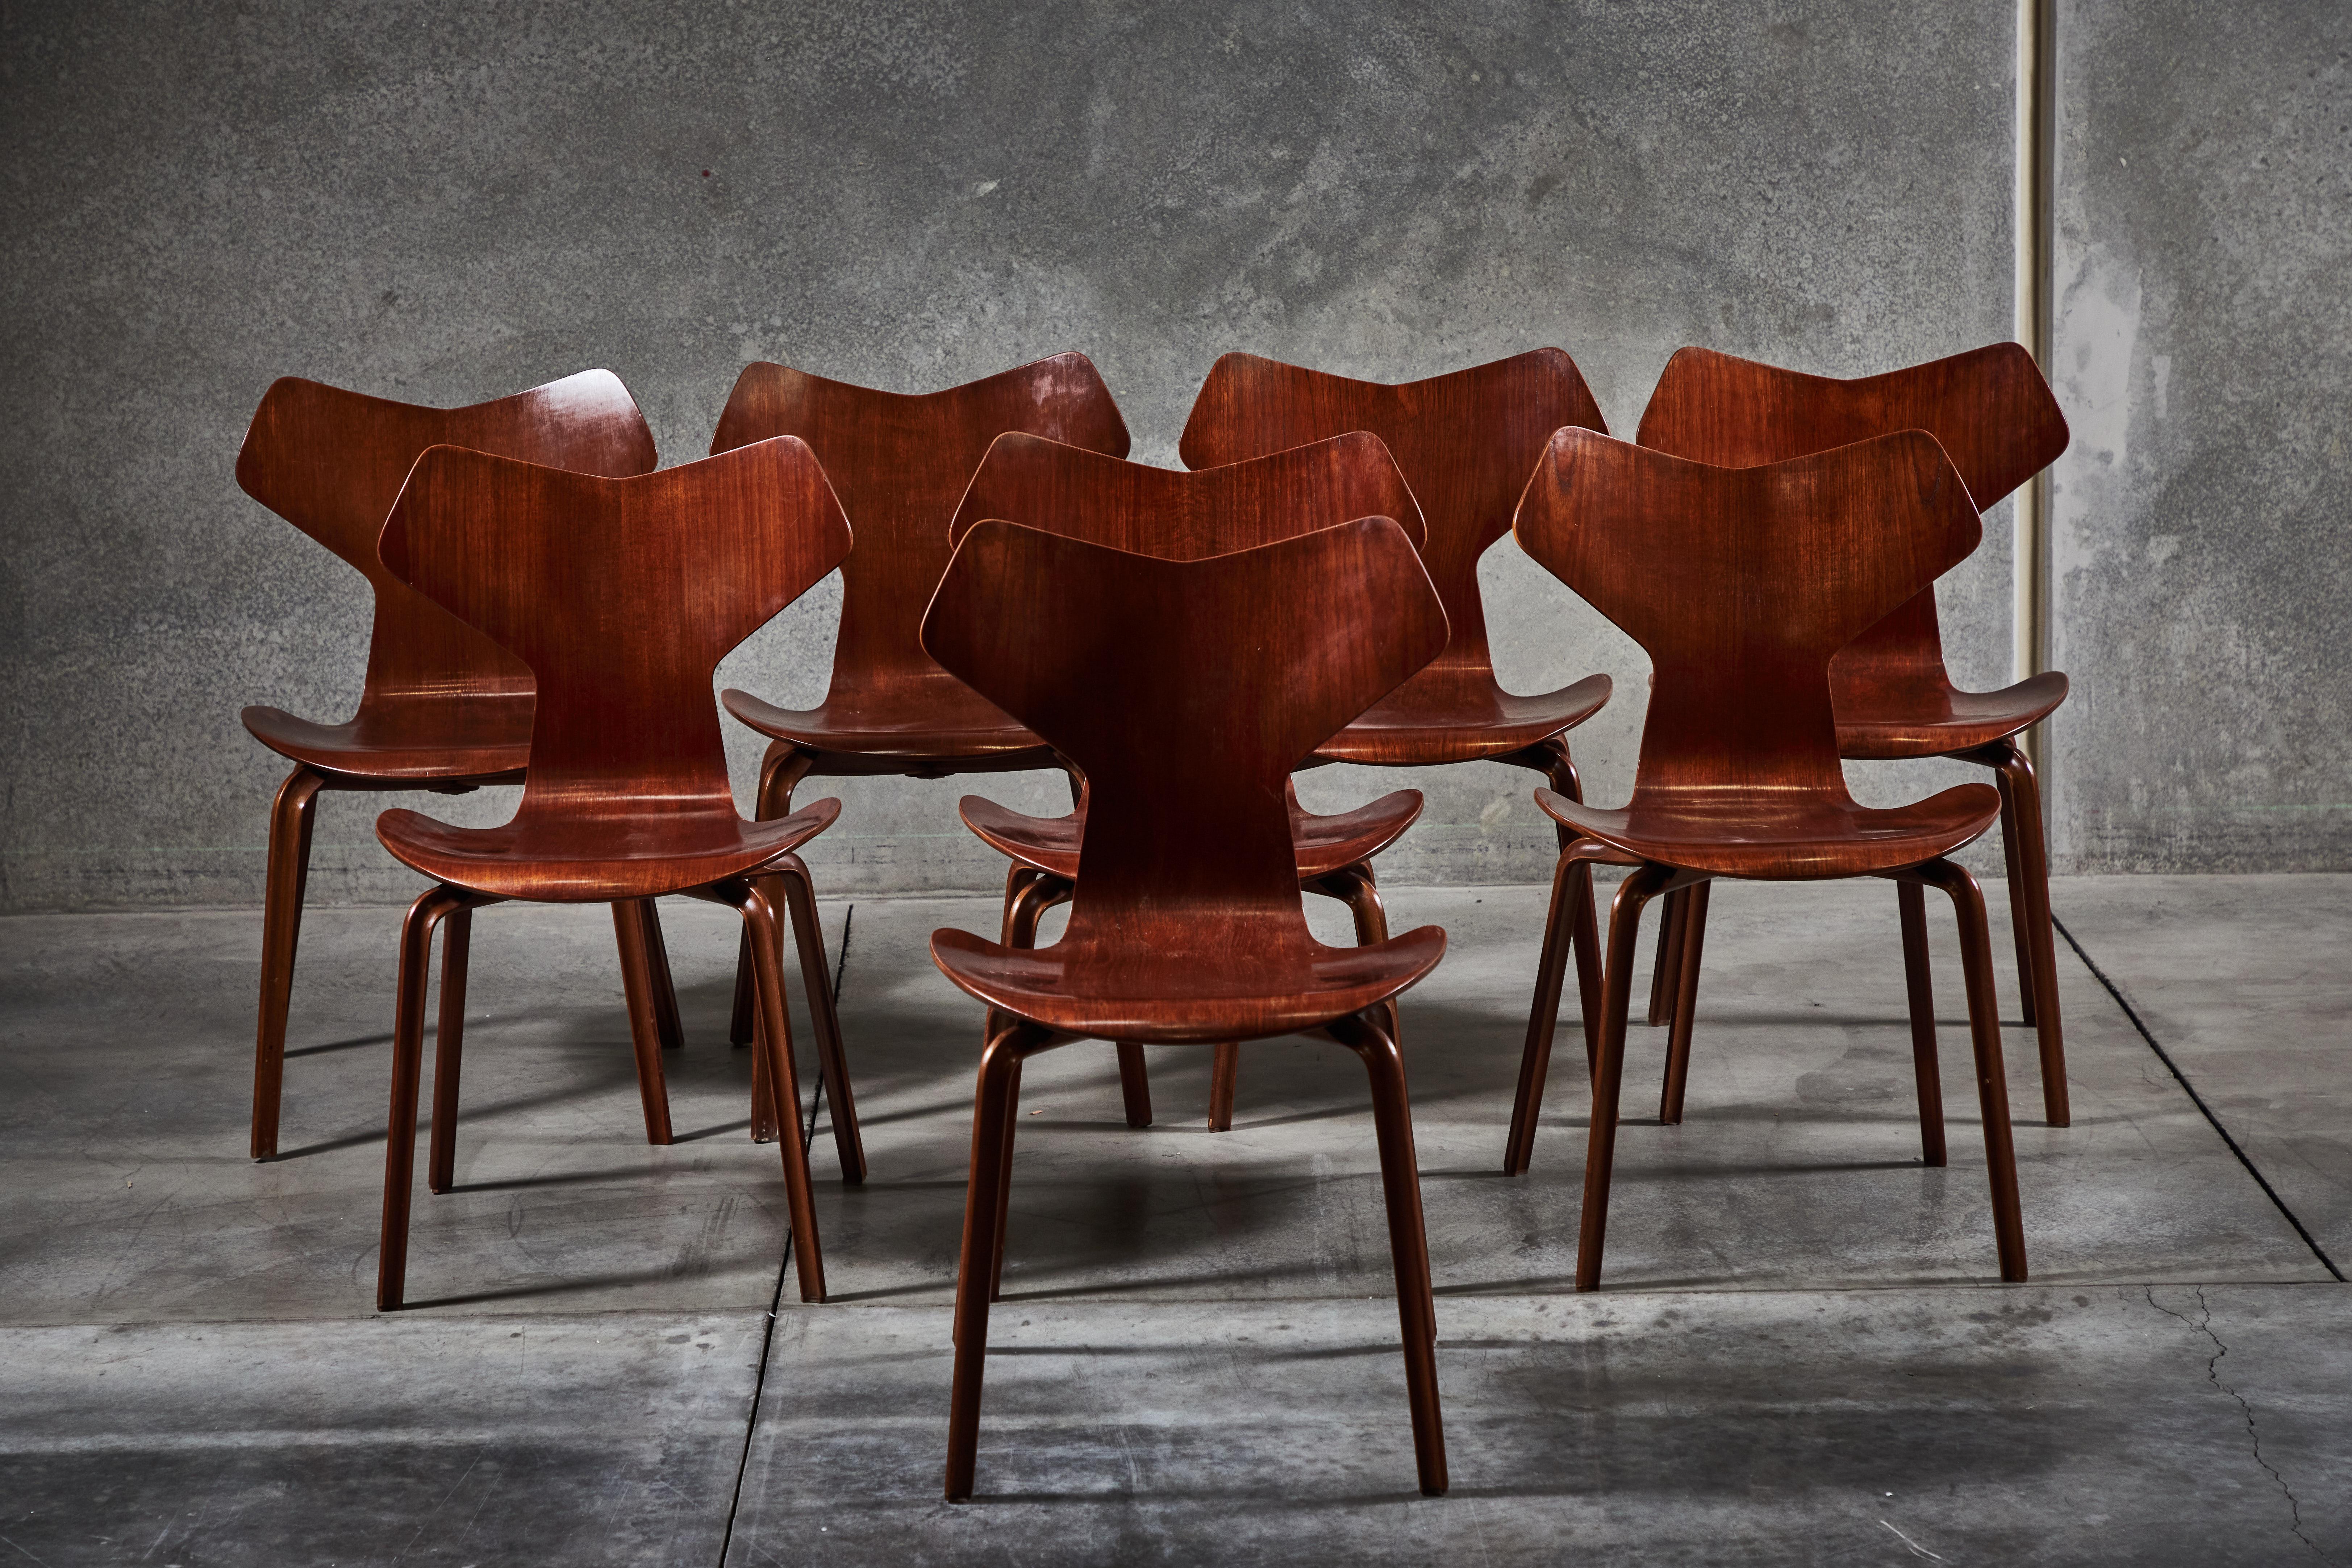 Eight first generation model 4130 “Grand Prix” chairs in teak by Arne Jacobsen for Fritz Hansen. Made in Denmark circa 1957.